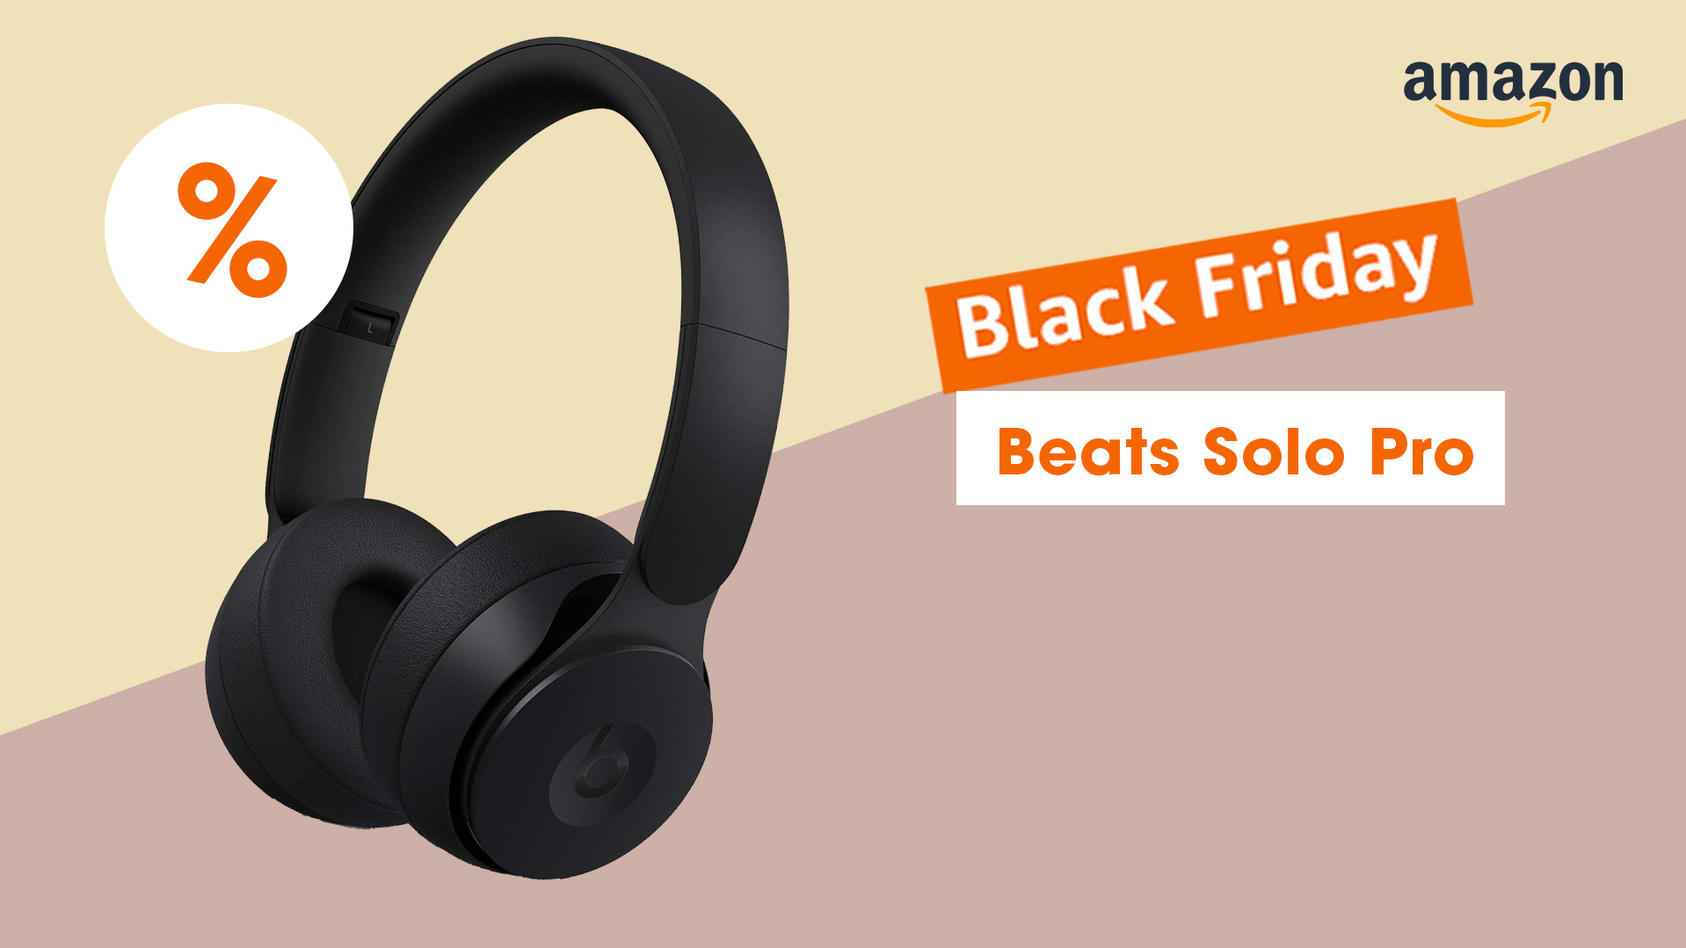 Beats Solo Pro: Lohnt sich dieser “Black Friday”-Deal?